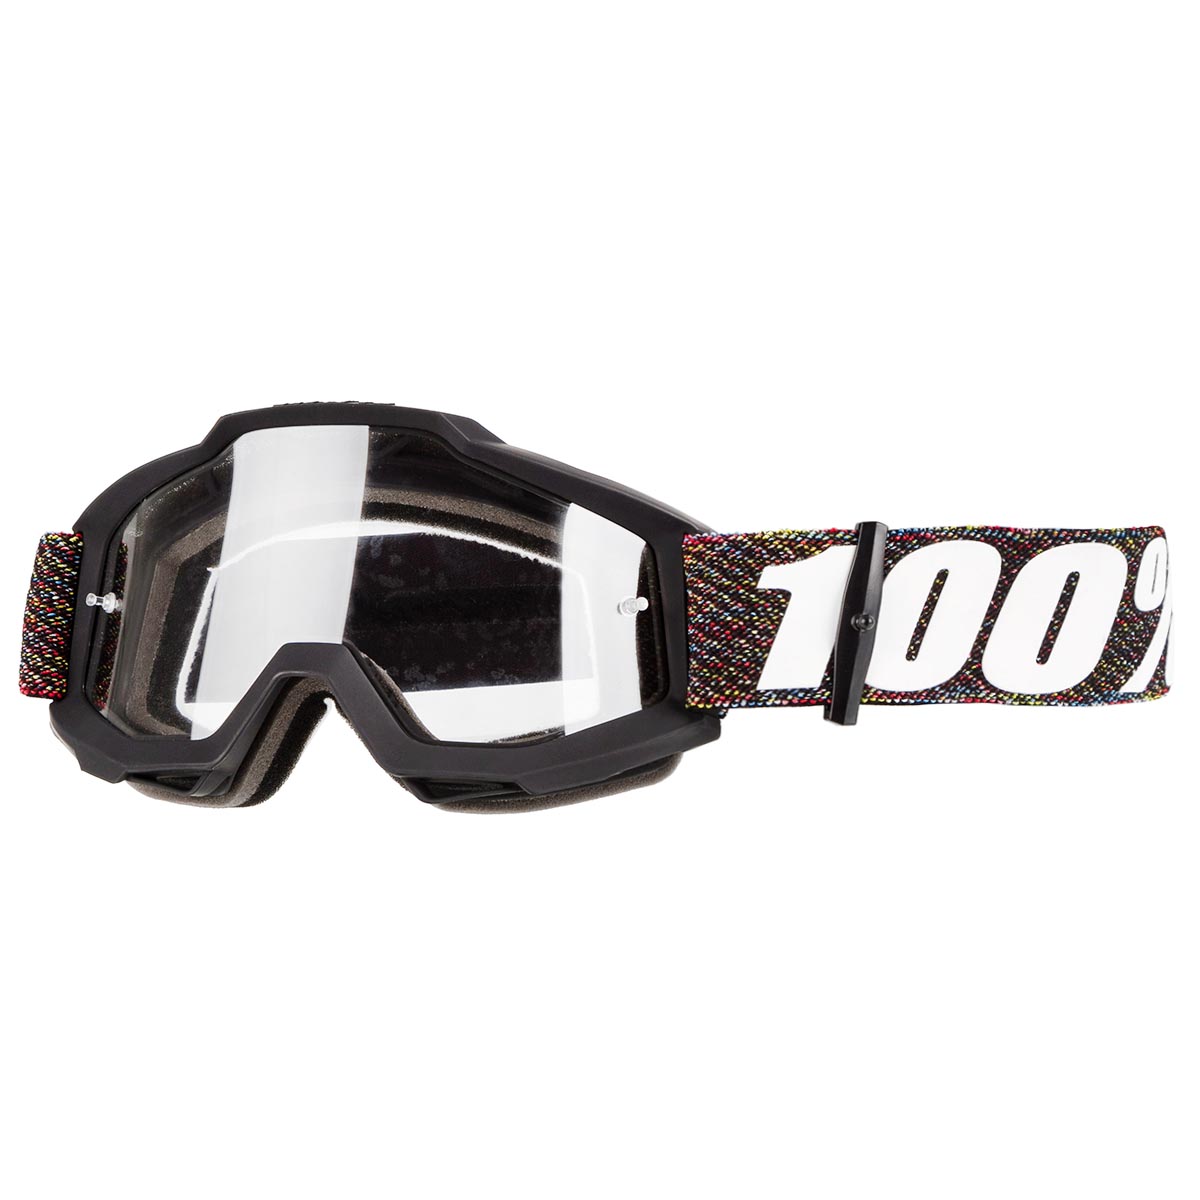 100% Goggle Accuri Krick - Clear Anti-Fog